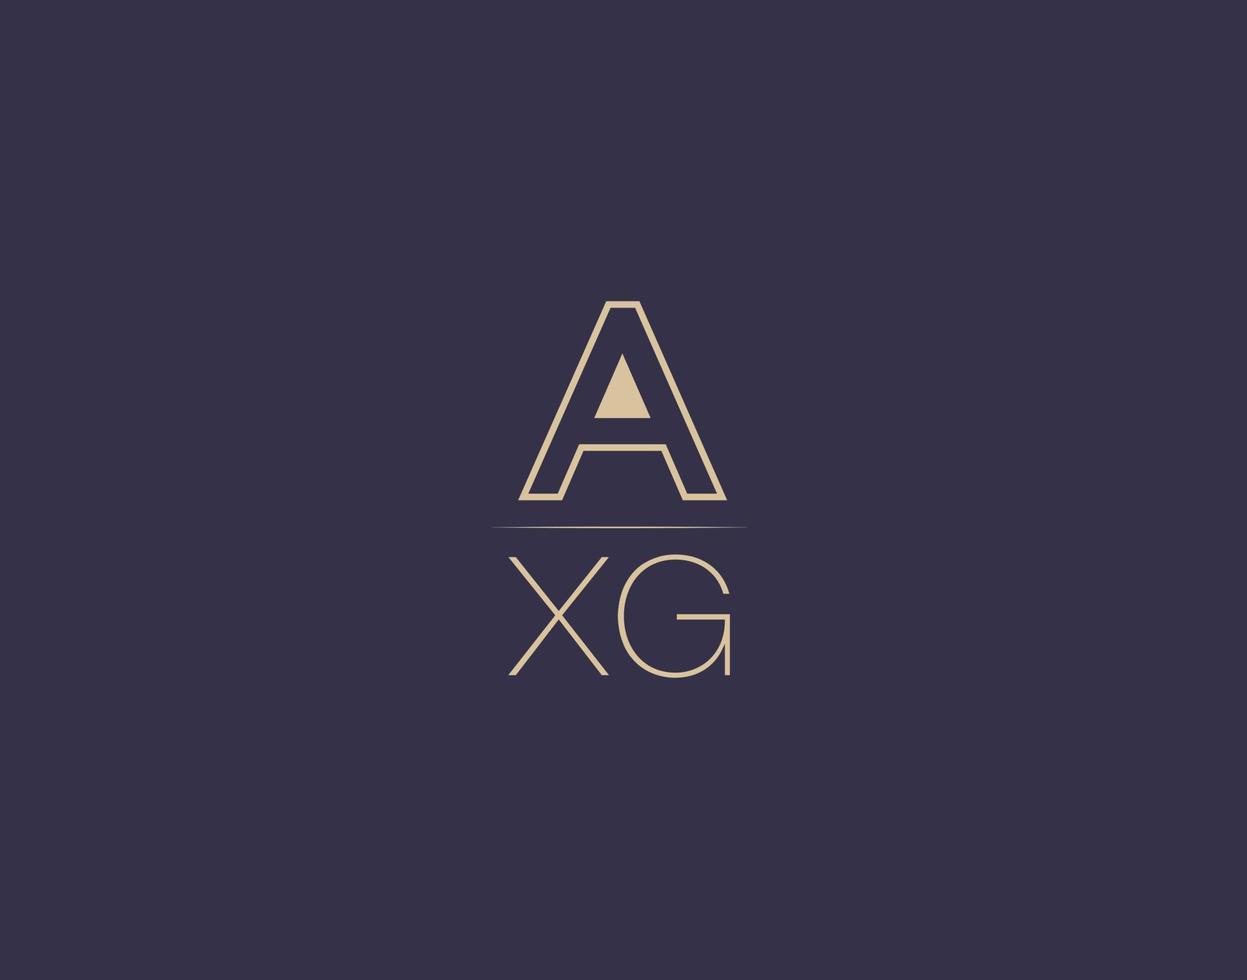 AXG letter logo design modern minimalist vector images